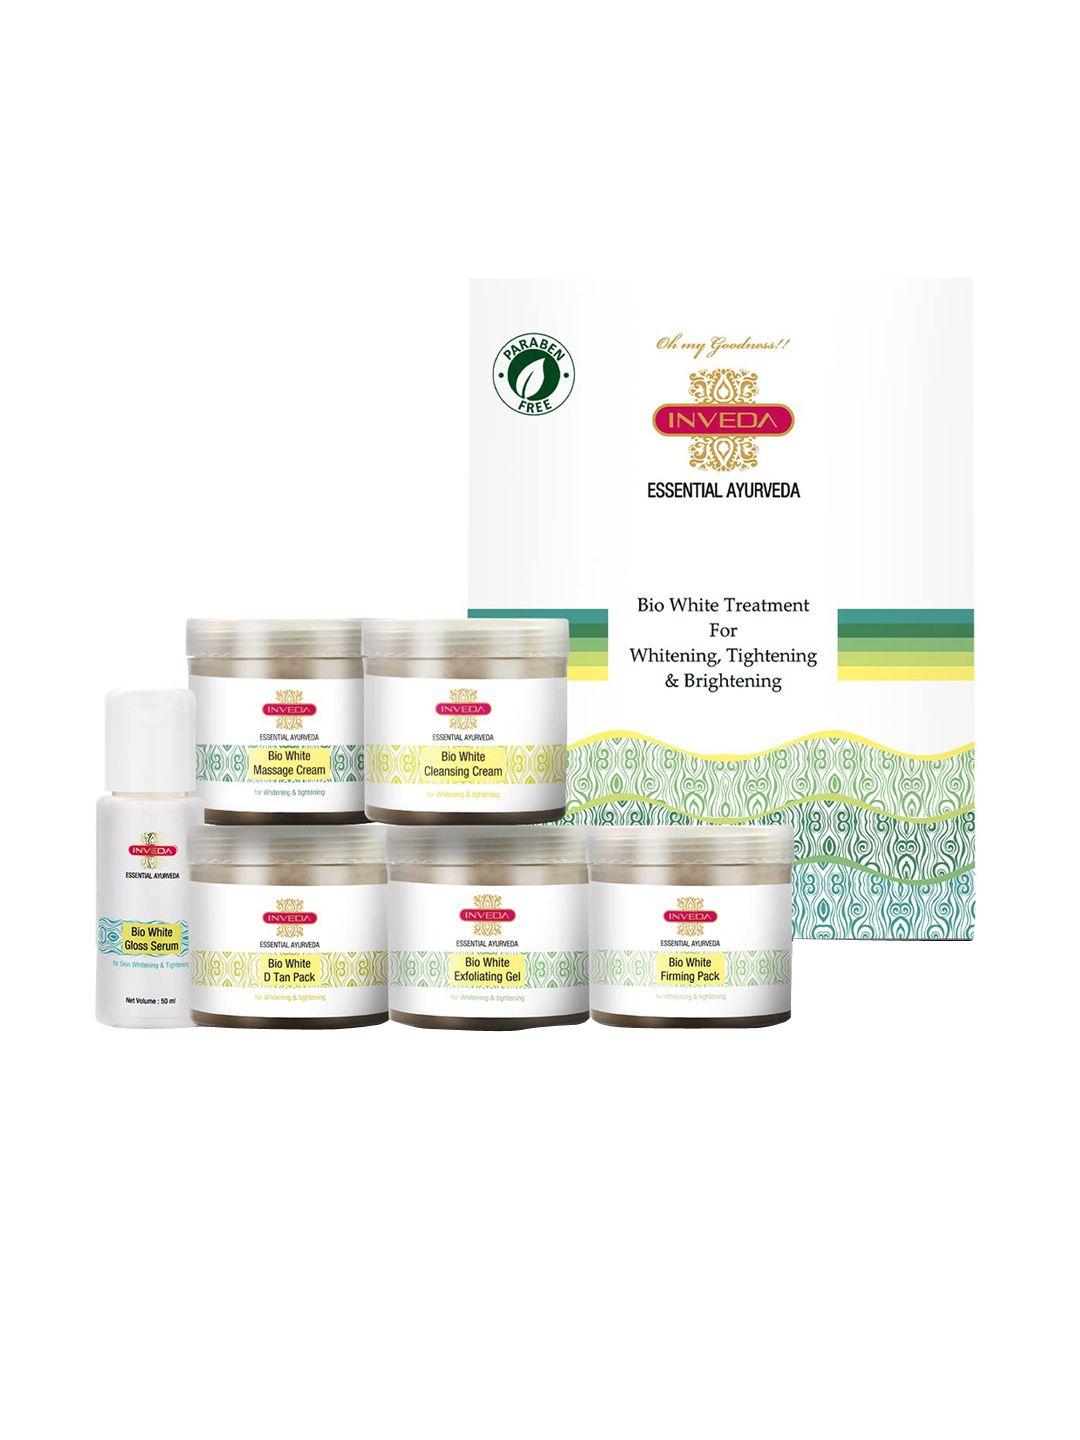 inveda set of 6 serum-50ml-de-tan & firming pack-massage & cleansing cream-gel-100ml each